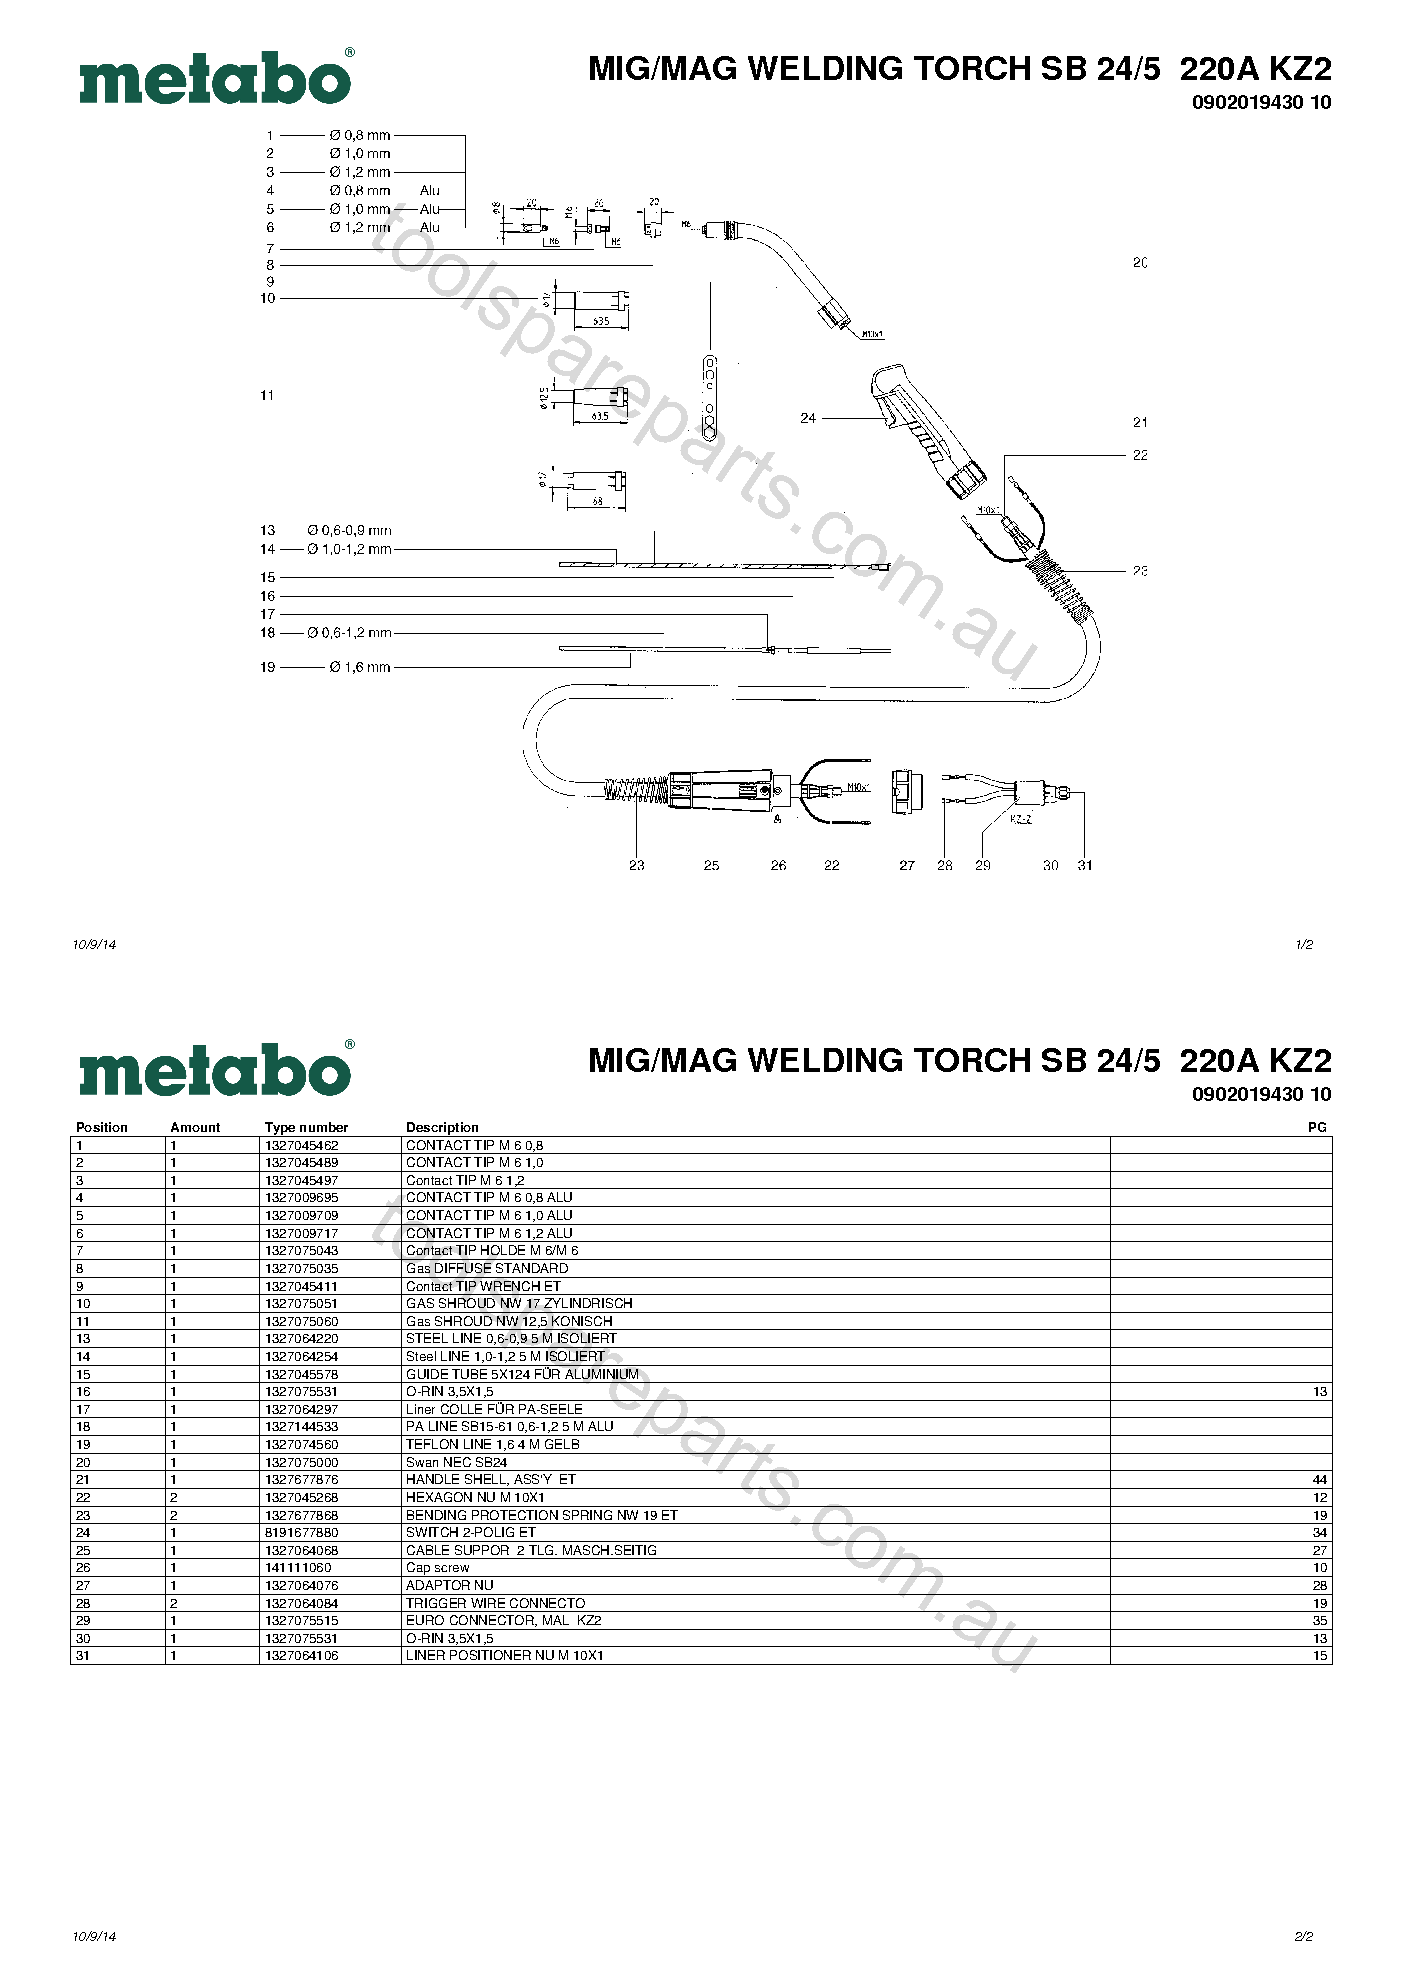 Metabo MIG/MAG WELDING TORCH SB 24/5 220A KZ2 0902019430 10  Diagram 1